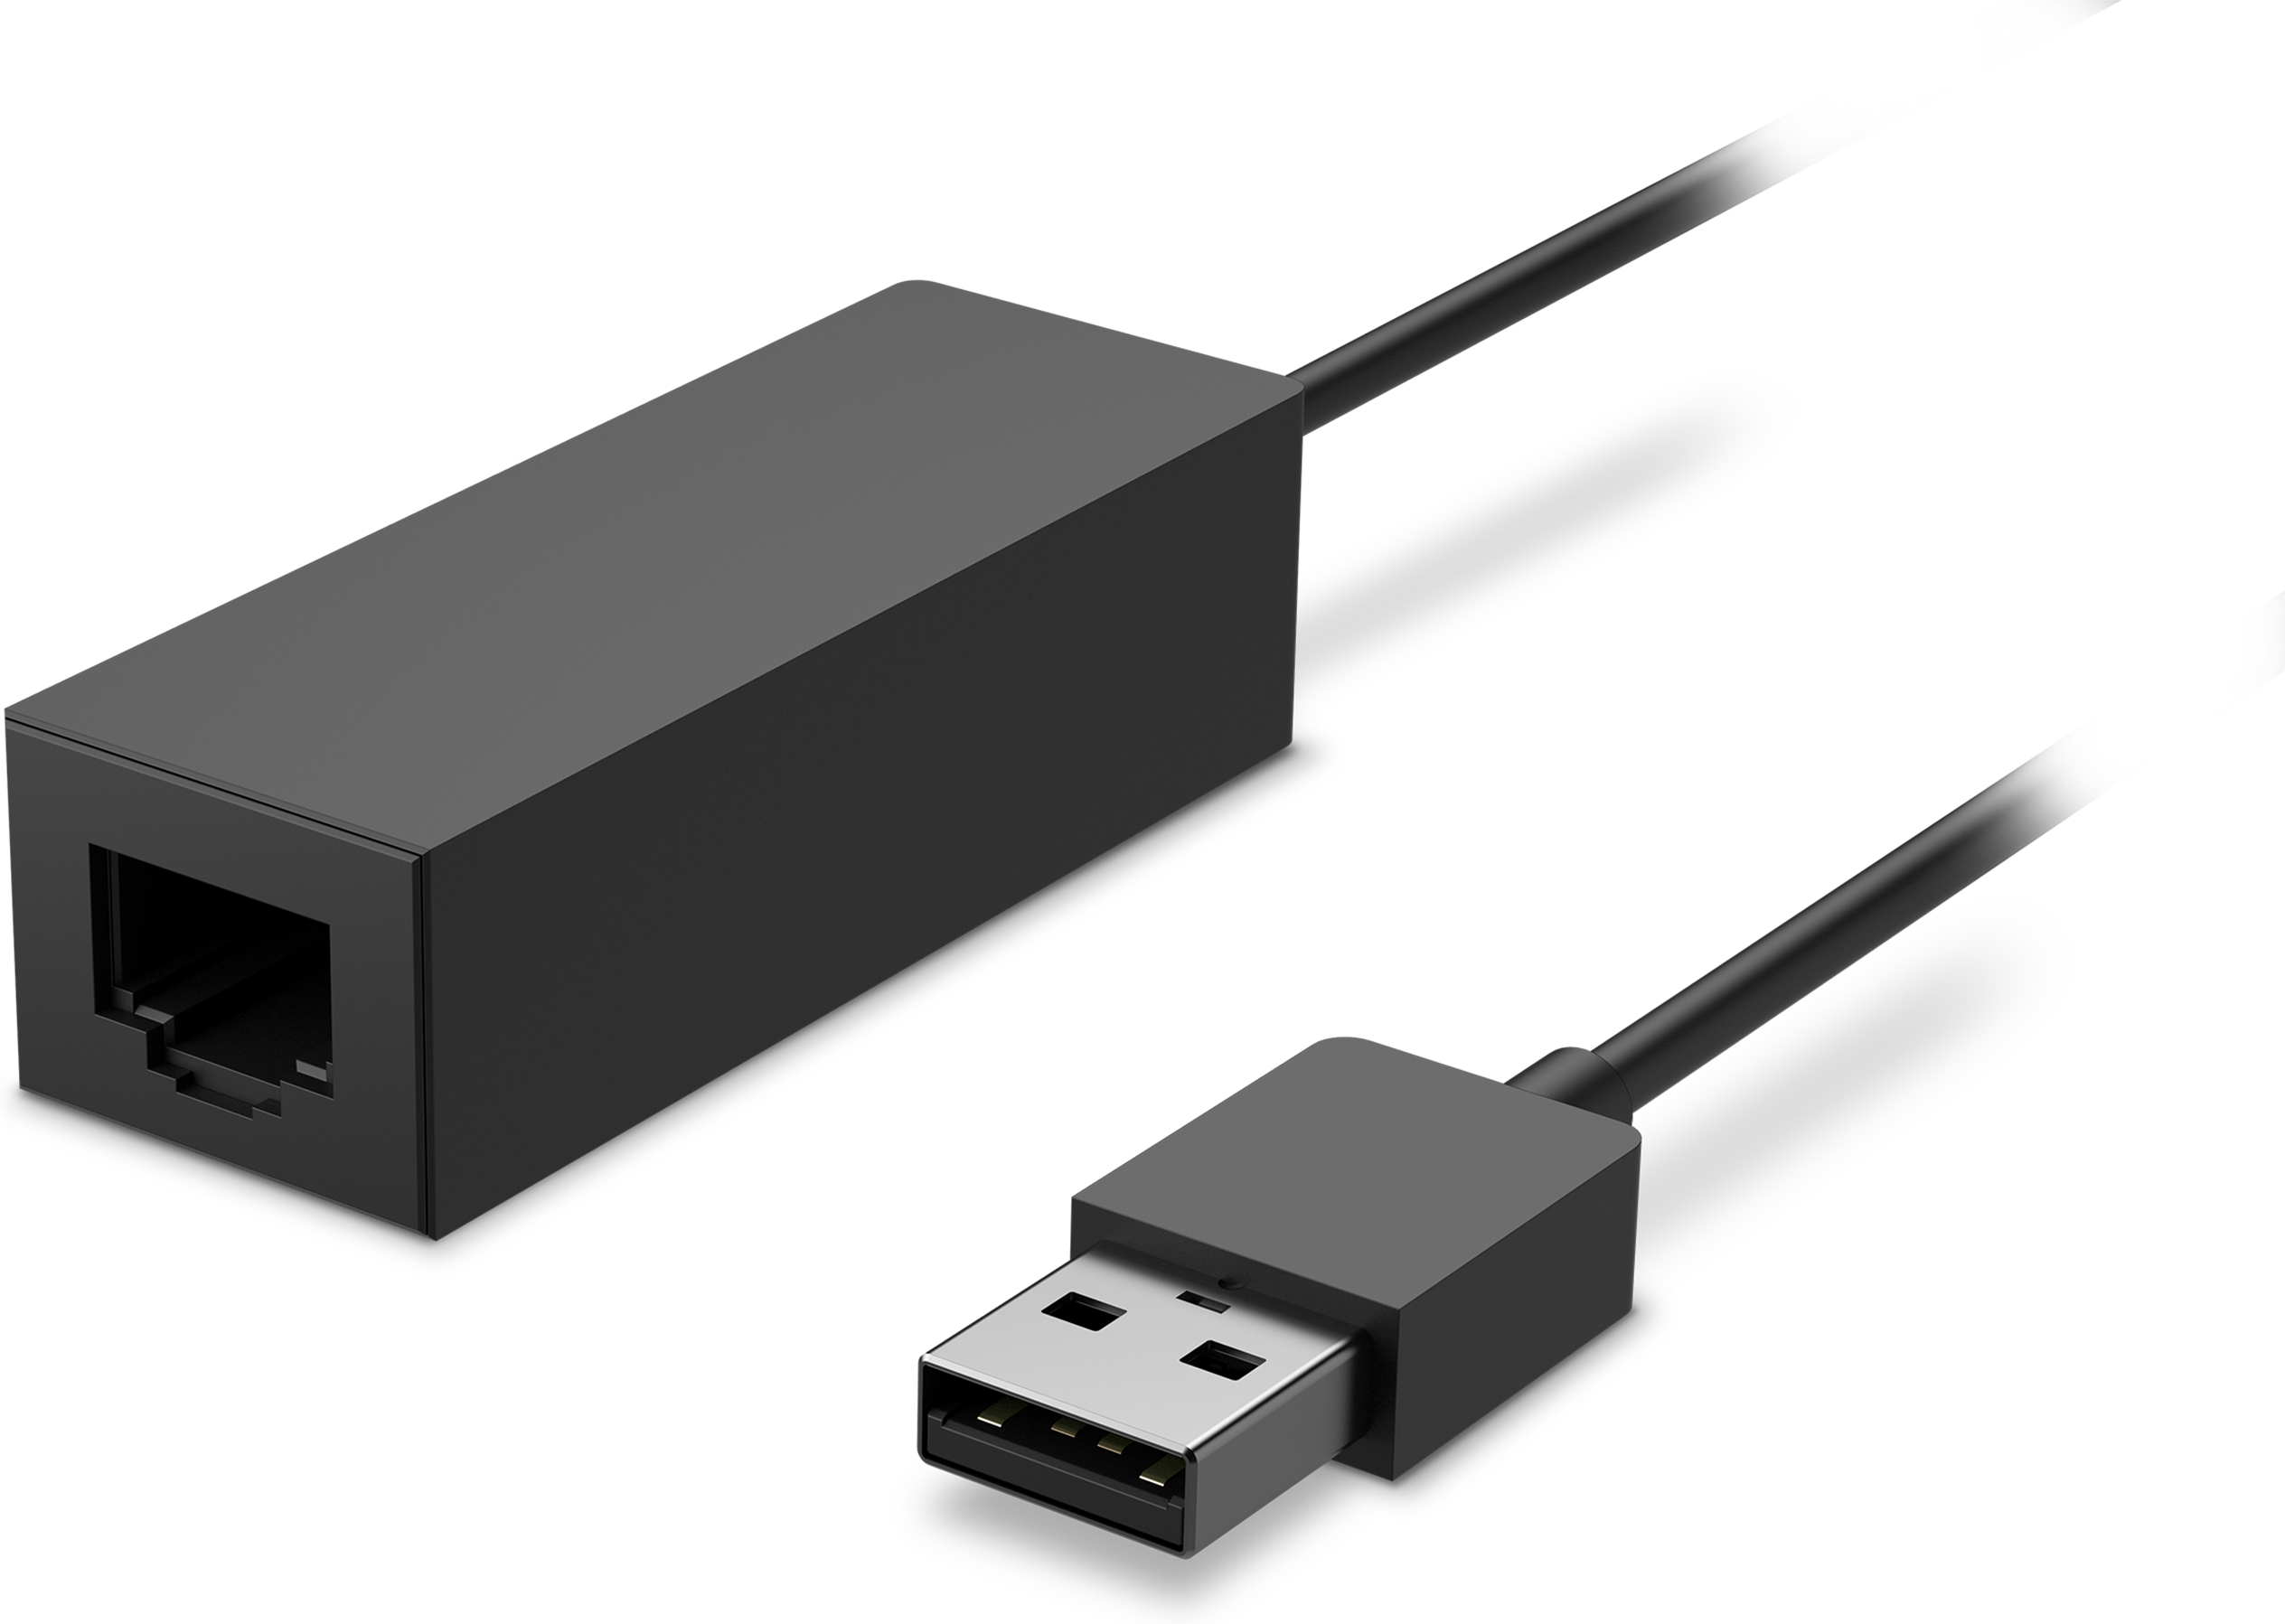 Buy Surface USB 3.0 Gigabit Ethernet Adapter - Microsoft Store